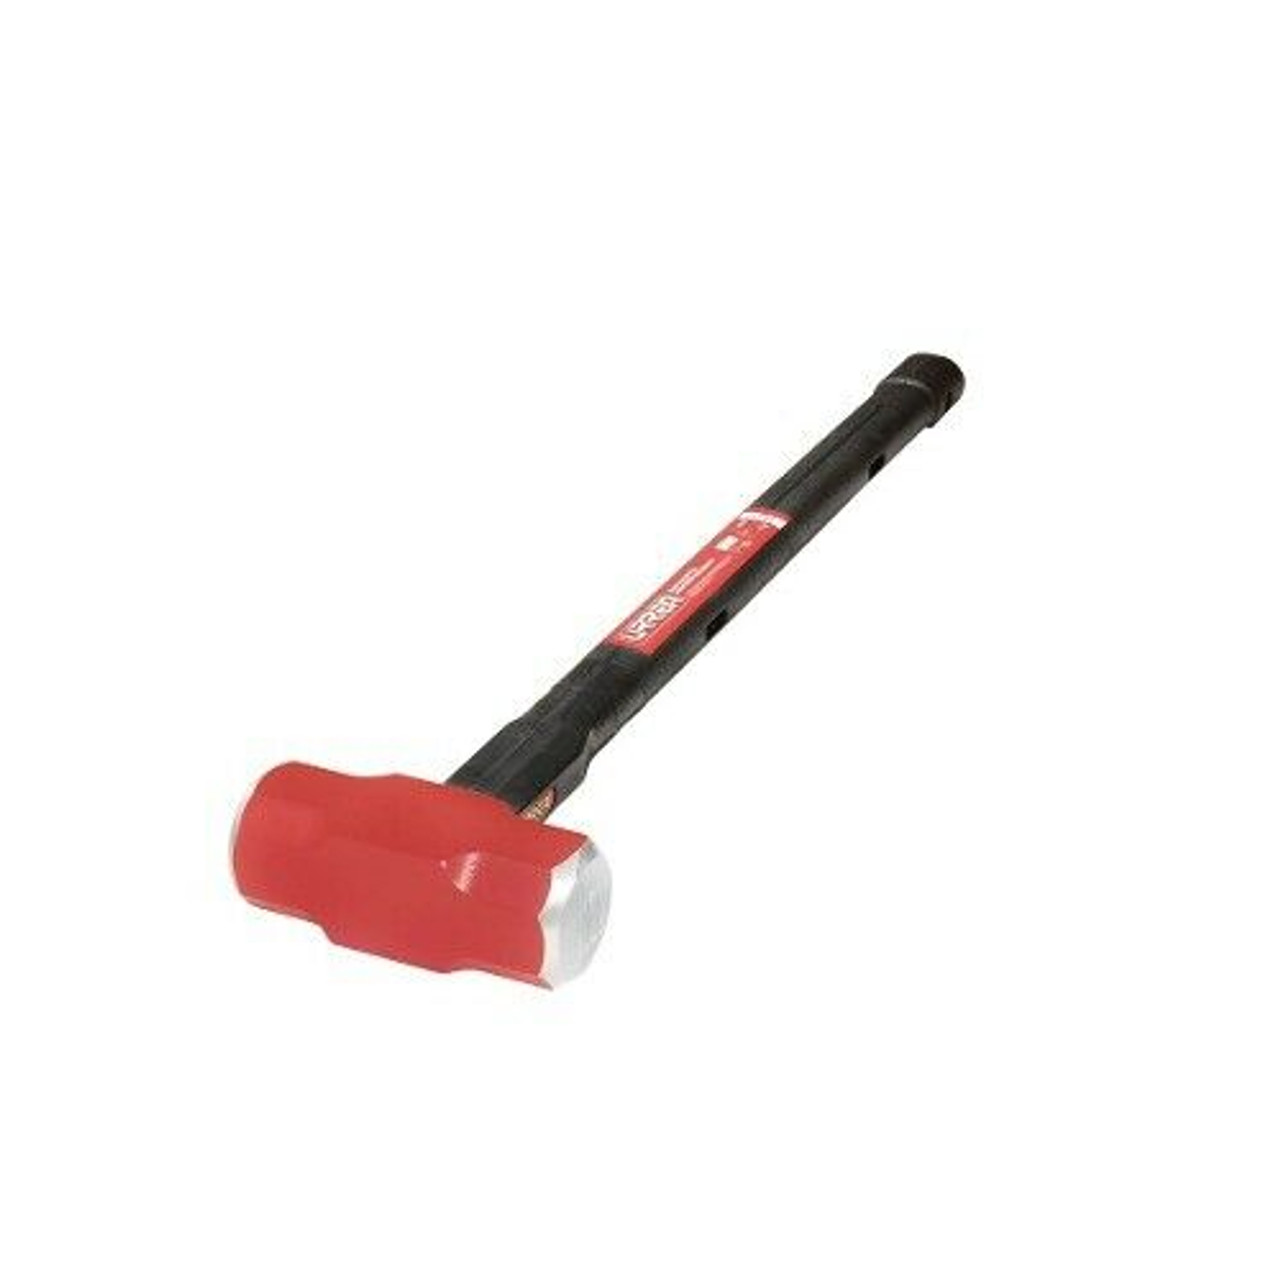 OctagonOctagonal Indestructible Sledge Hammers With16"Rubber Grip Handleal Indestructible Sledge Hammers With16" Rubber Grip Handle